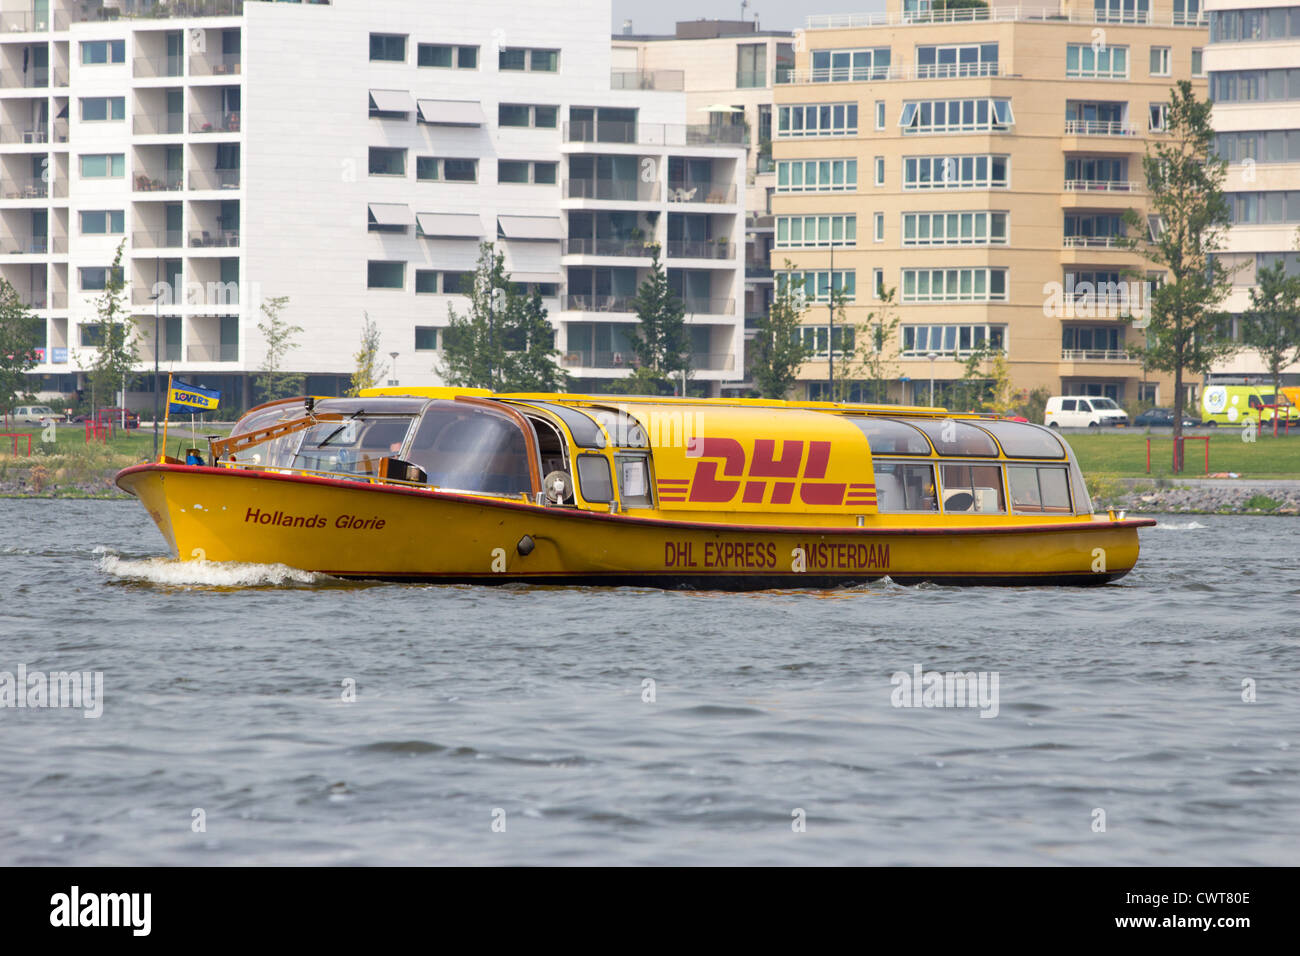 DHL Express Amsterdam boat Stock Photo